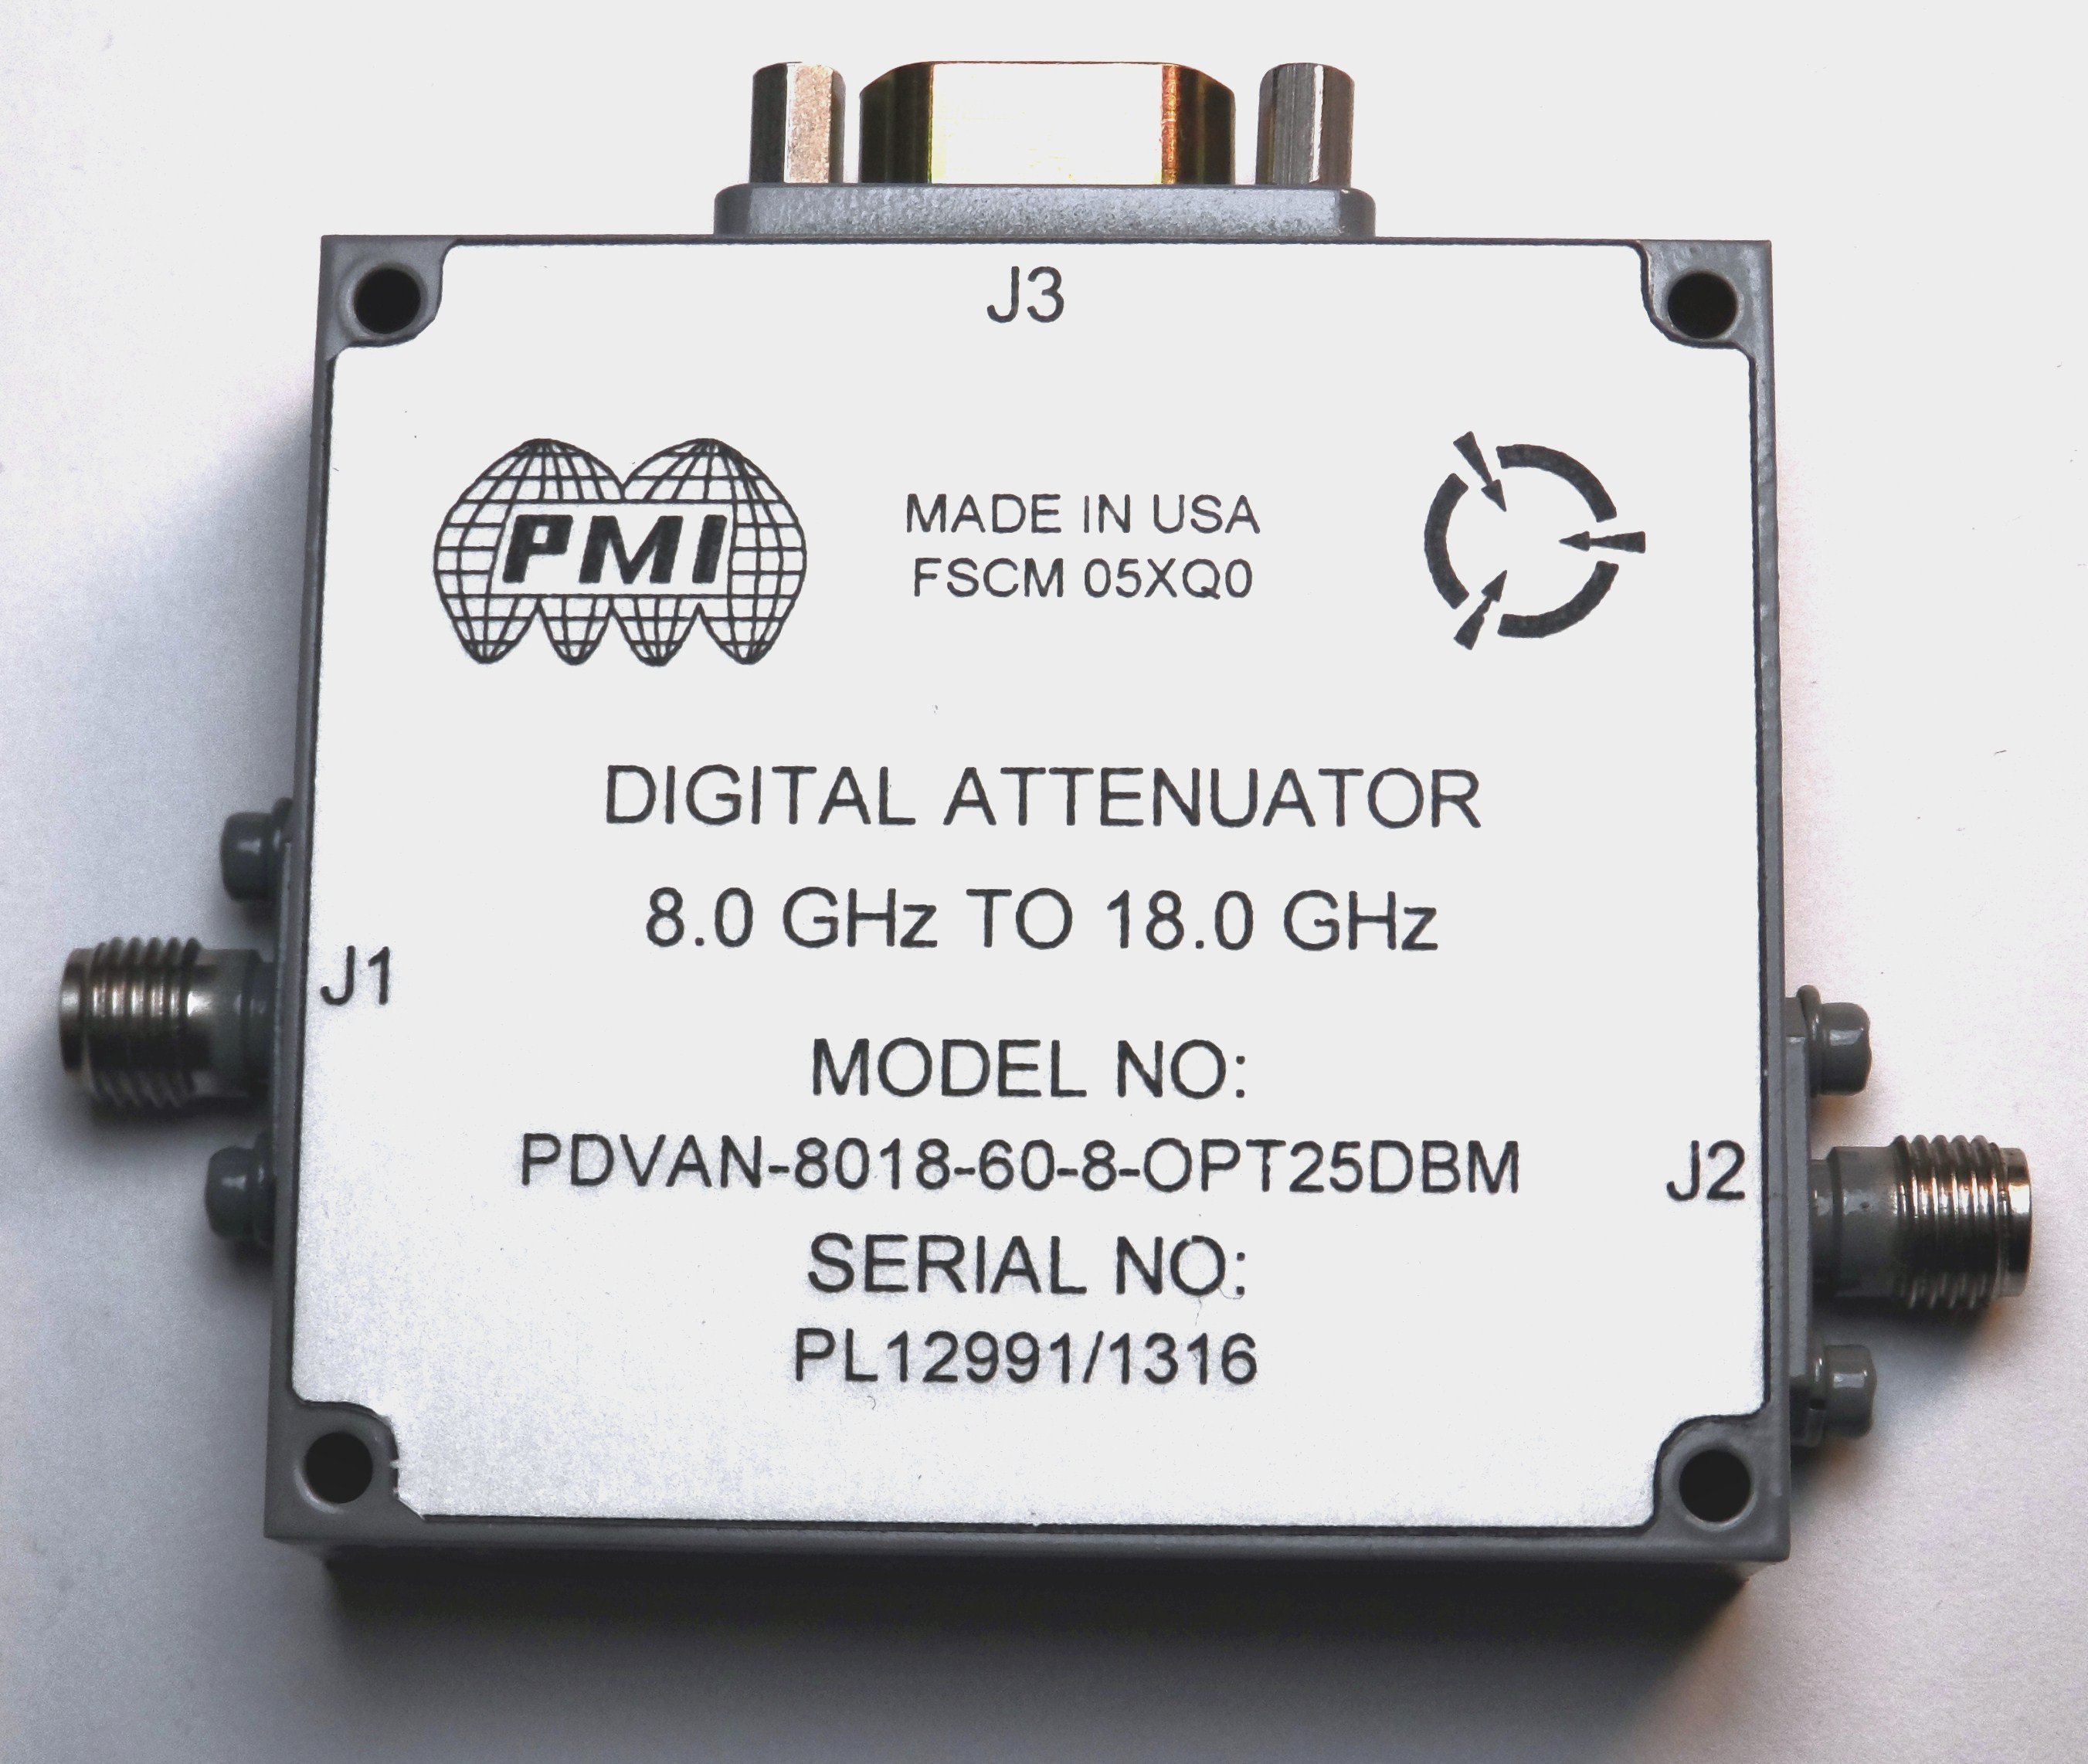 PDVAN-8018-60-8-OPT25DBM Digitally Programmable Attenuator